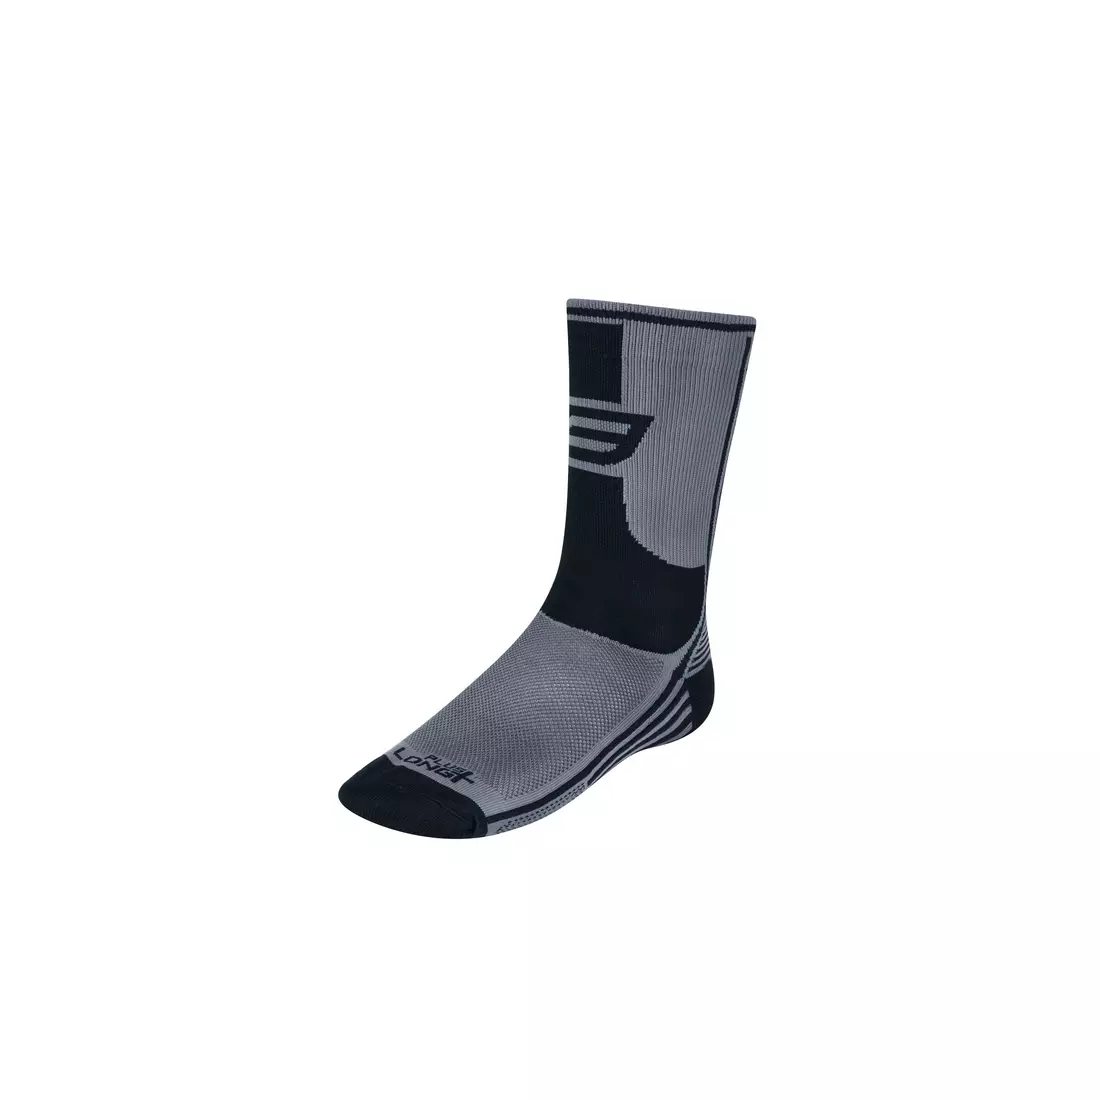 FORCE LONG PLUS socks 900951-900961 gray-black